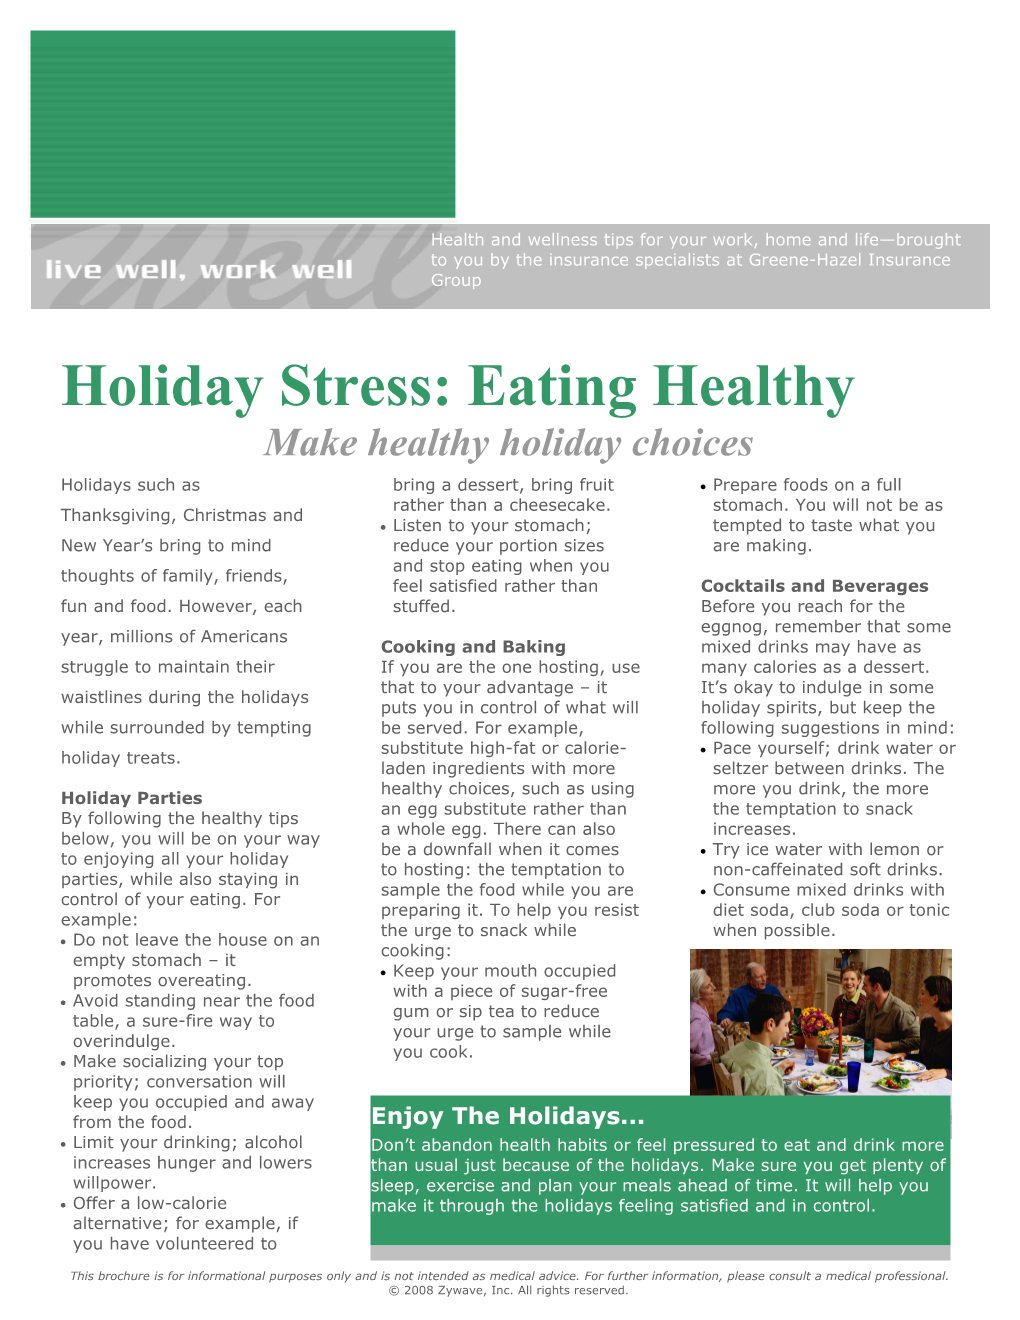 Holiday Stress: Healthy Eating